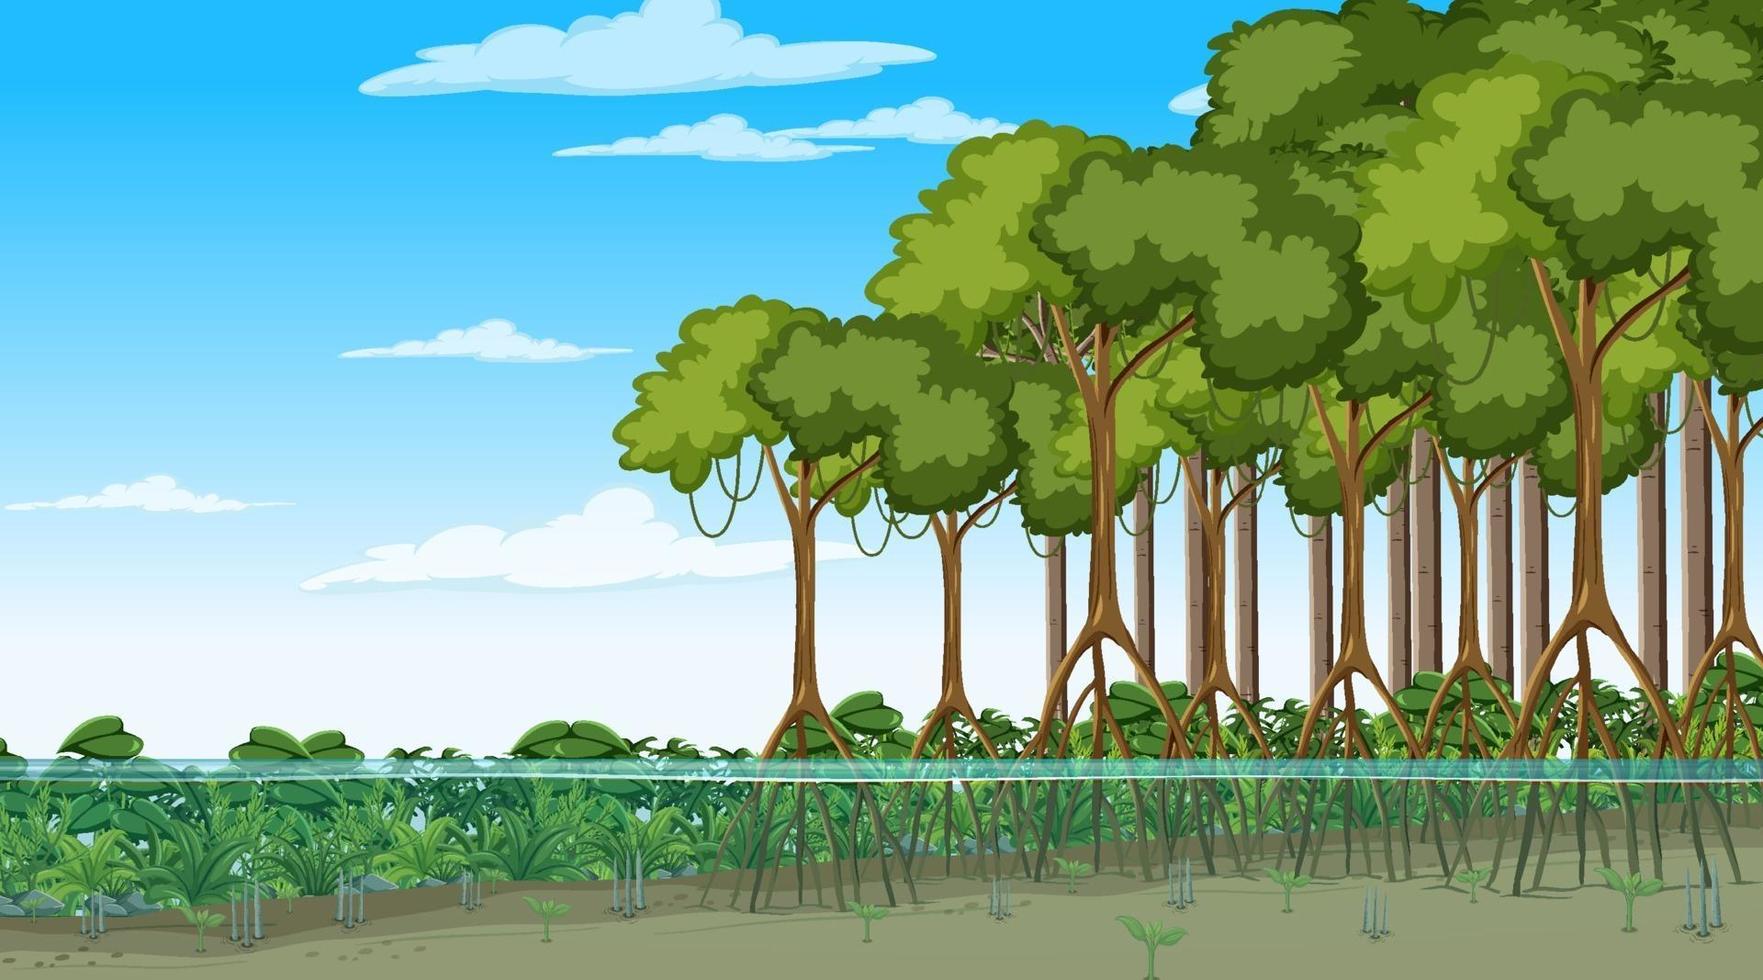 natuurtafereel met mangrovebos in cartoonstijl vector